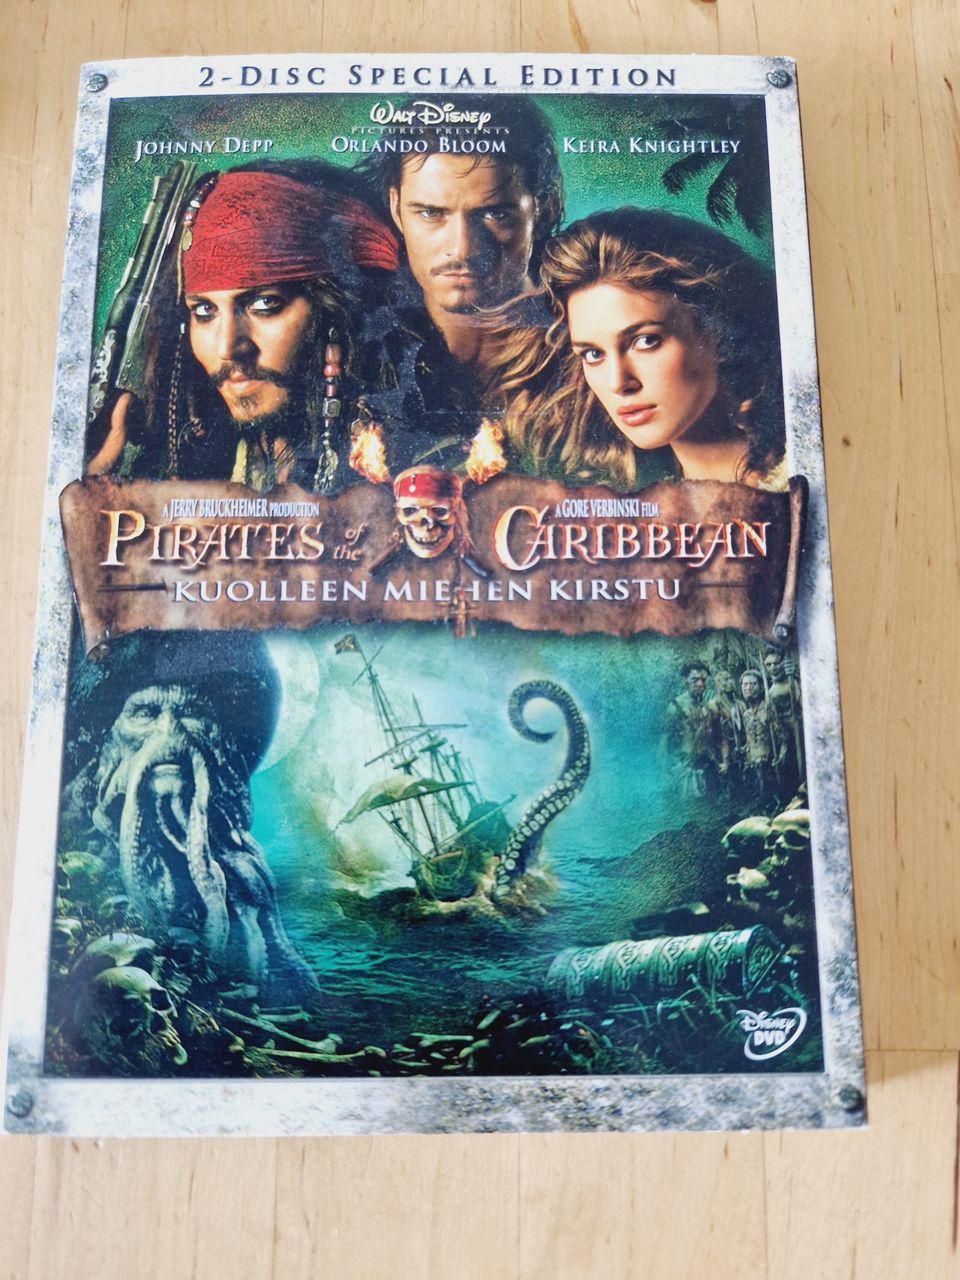 Piratea of the Caribbean: Kuolleen miehen kirstu DVD